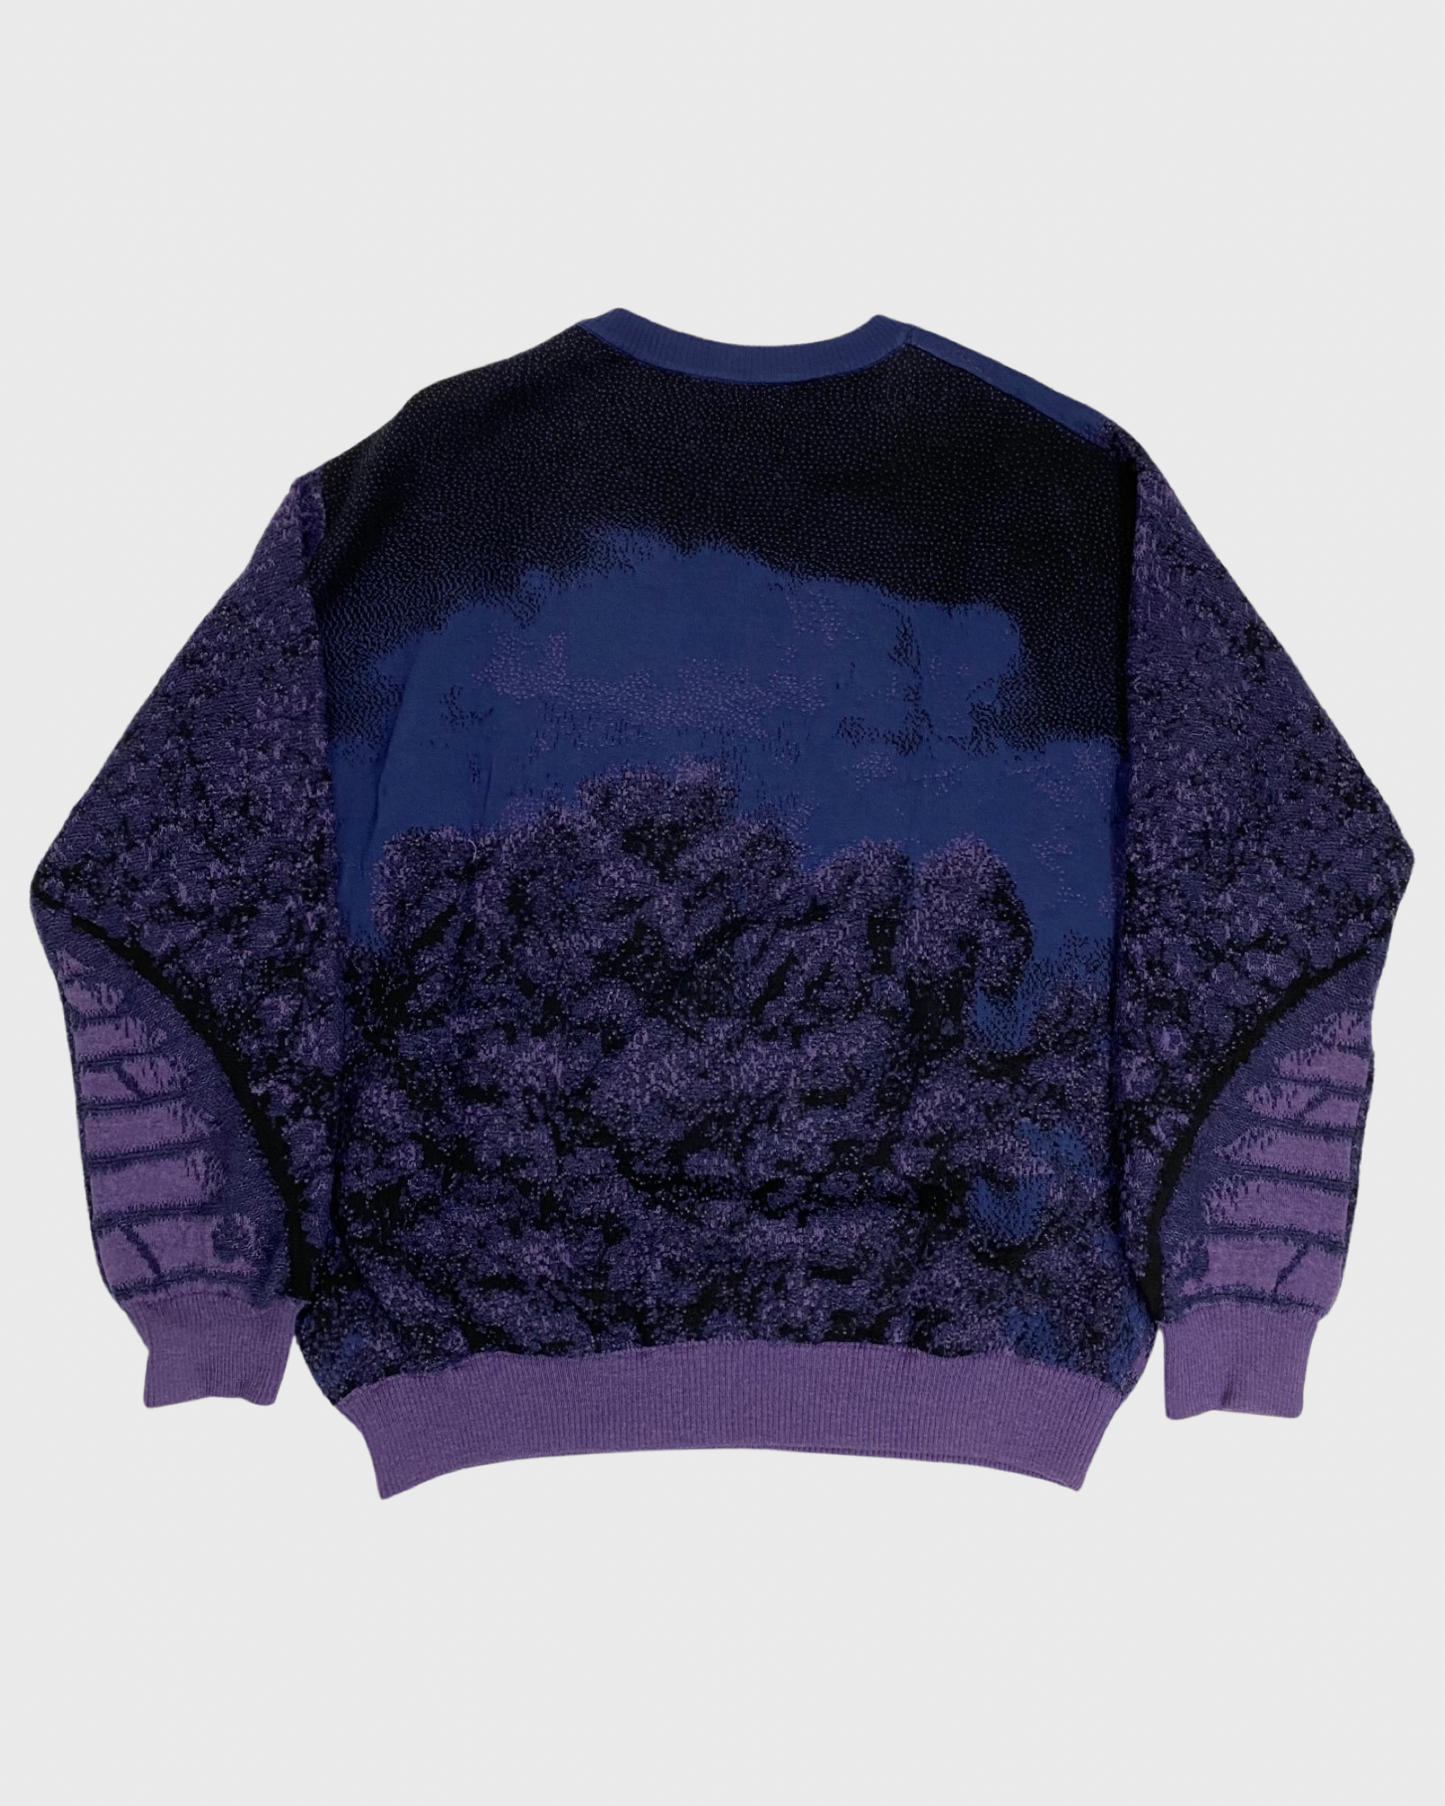 LV SS19 runway brick road sweater in purple SIZE:S